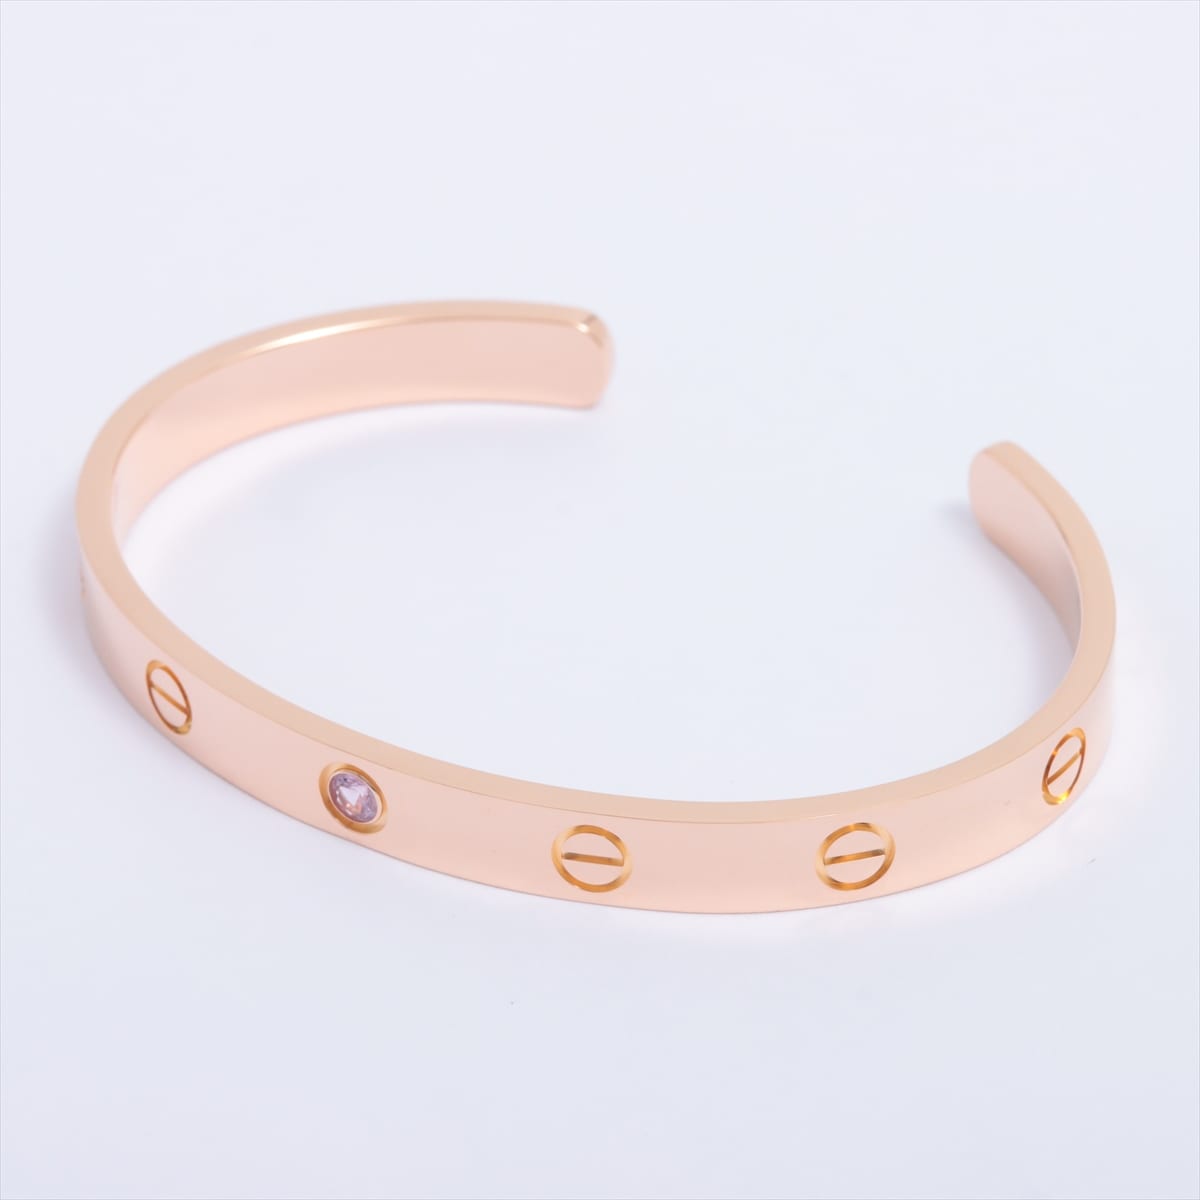 Cartier Love Open bangle 1P Pink sapphire Bracelet 750 PG 24.7g 17